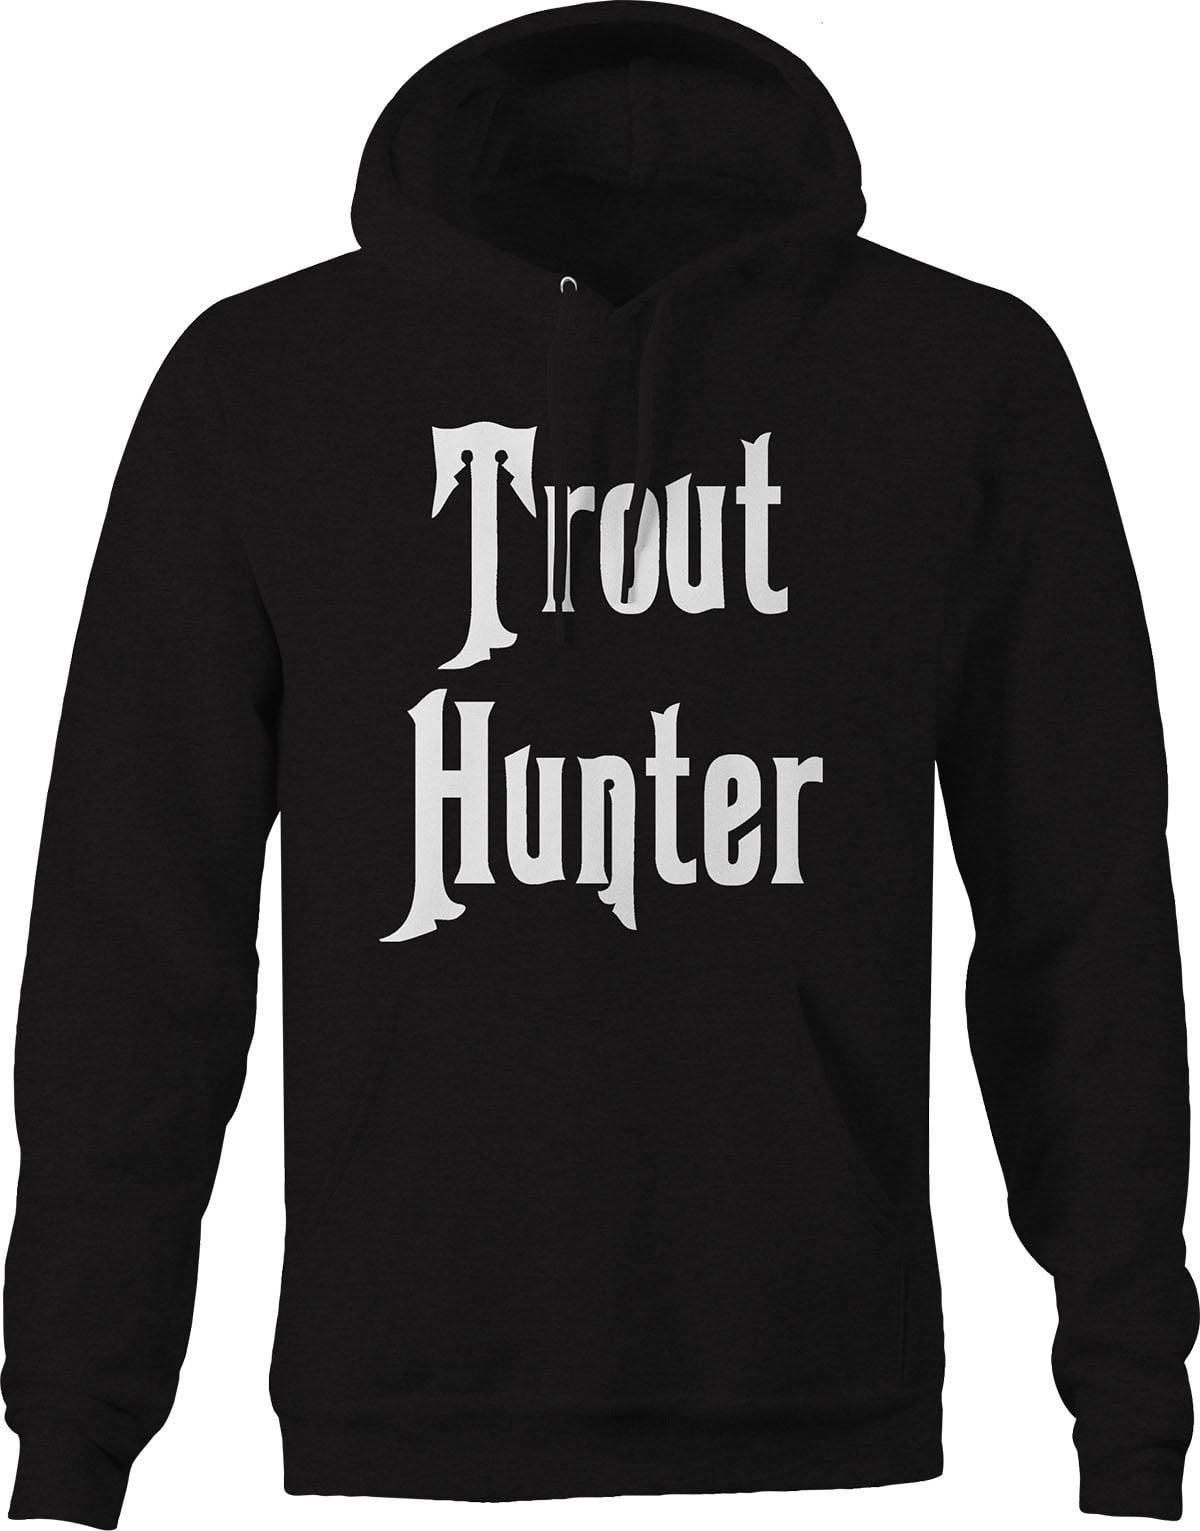 Trout Hunter Fishing Hoodie for Big Men 3XL Black 